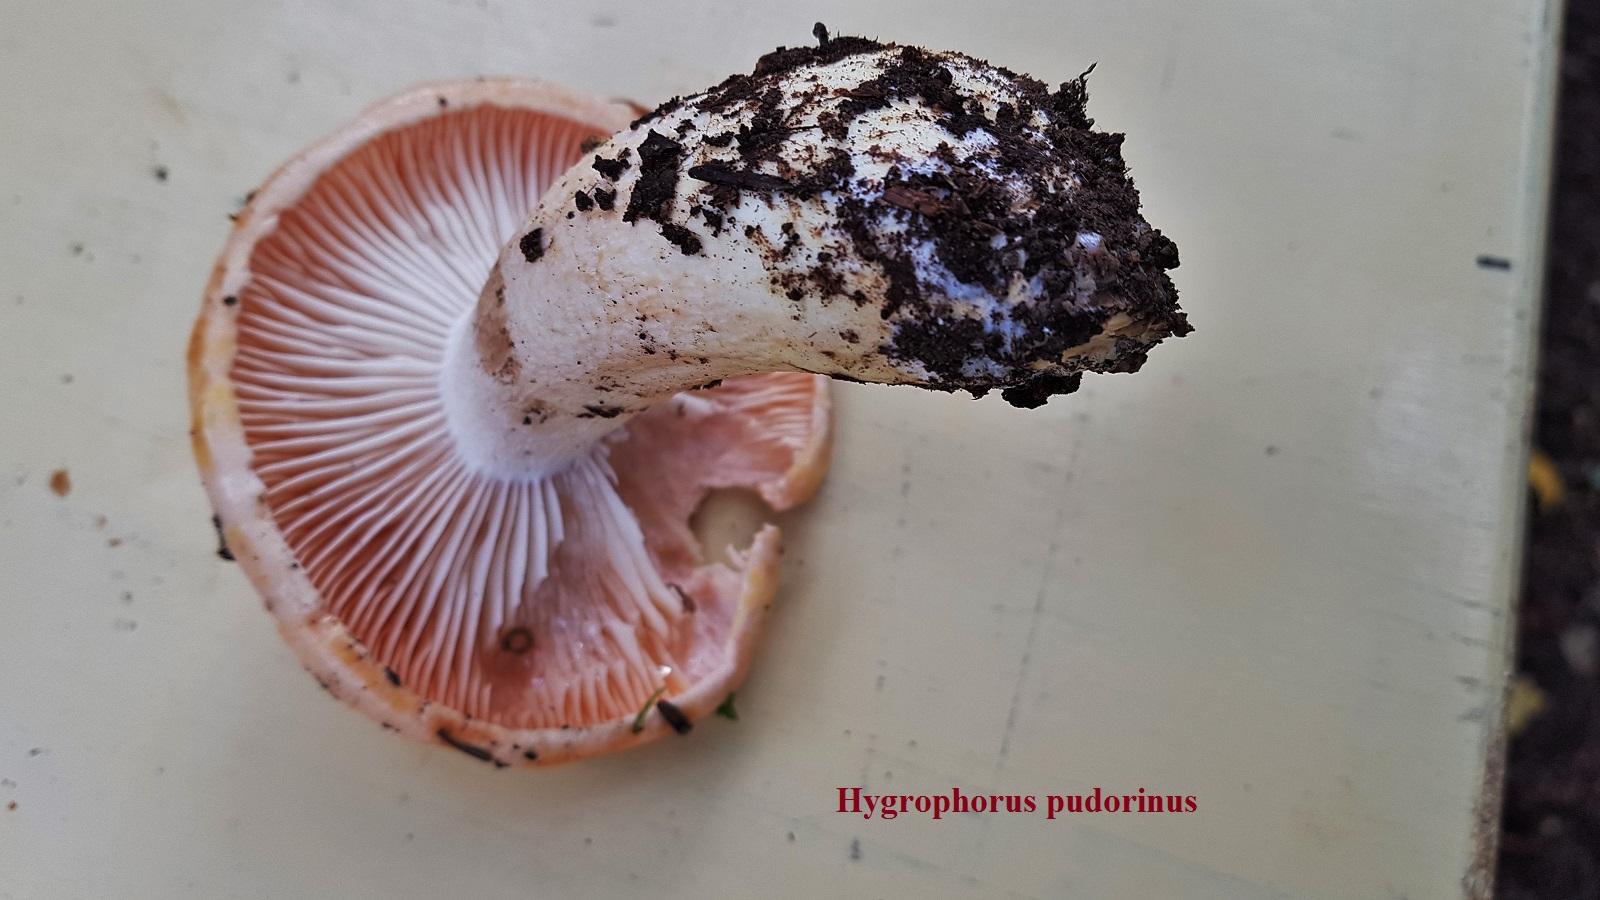 Hygrophorus pudorinus